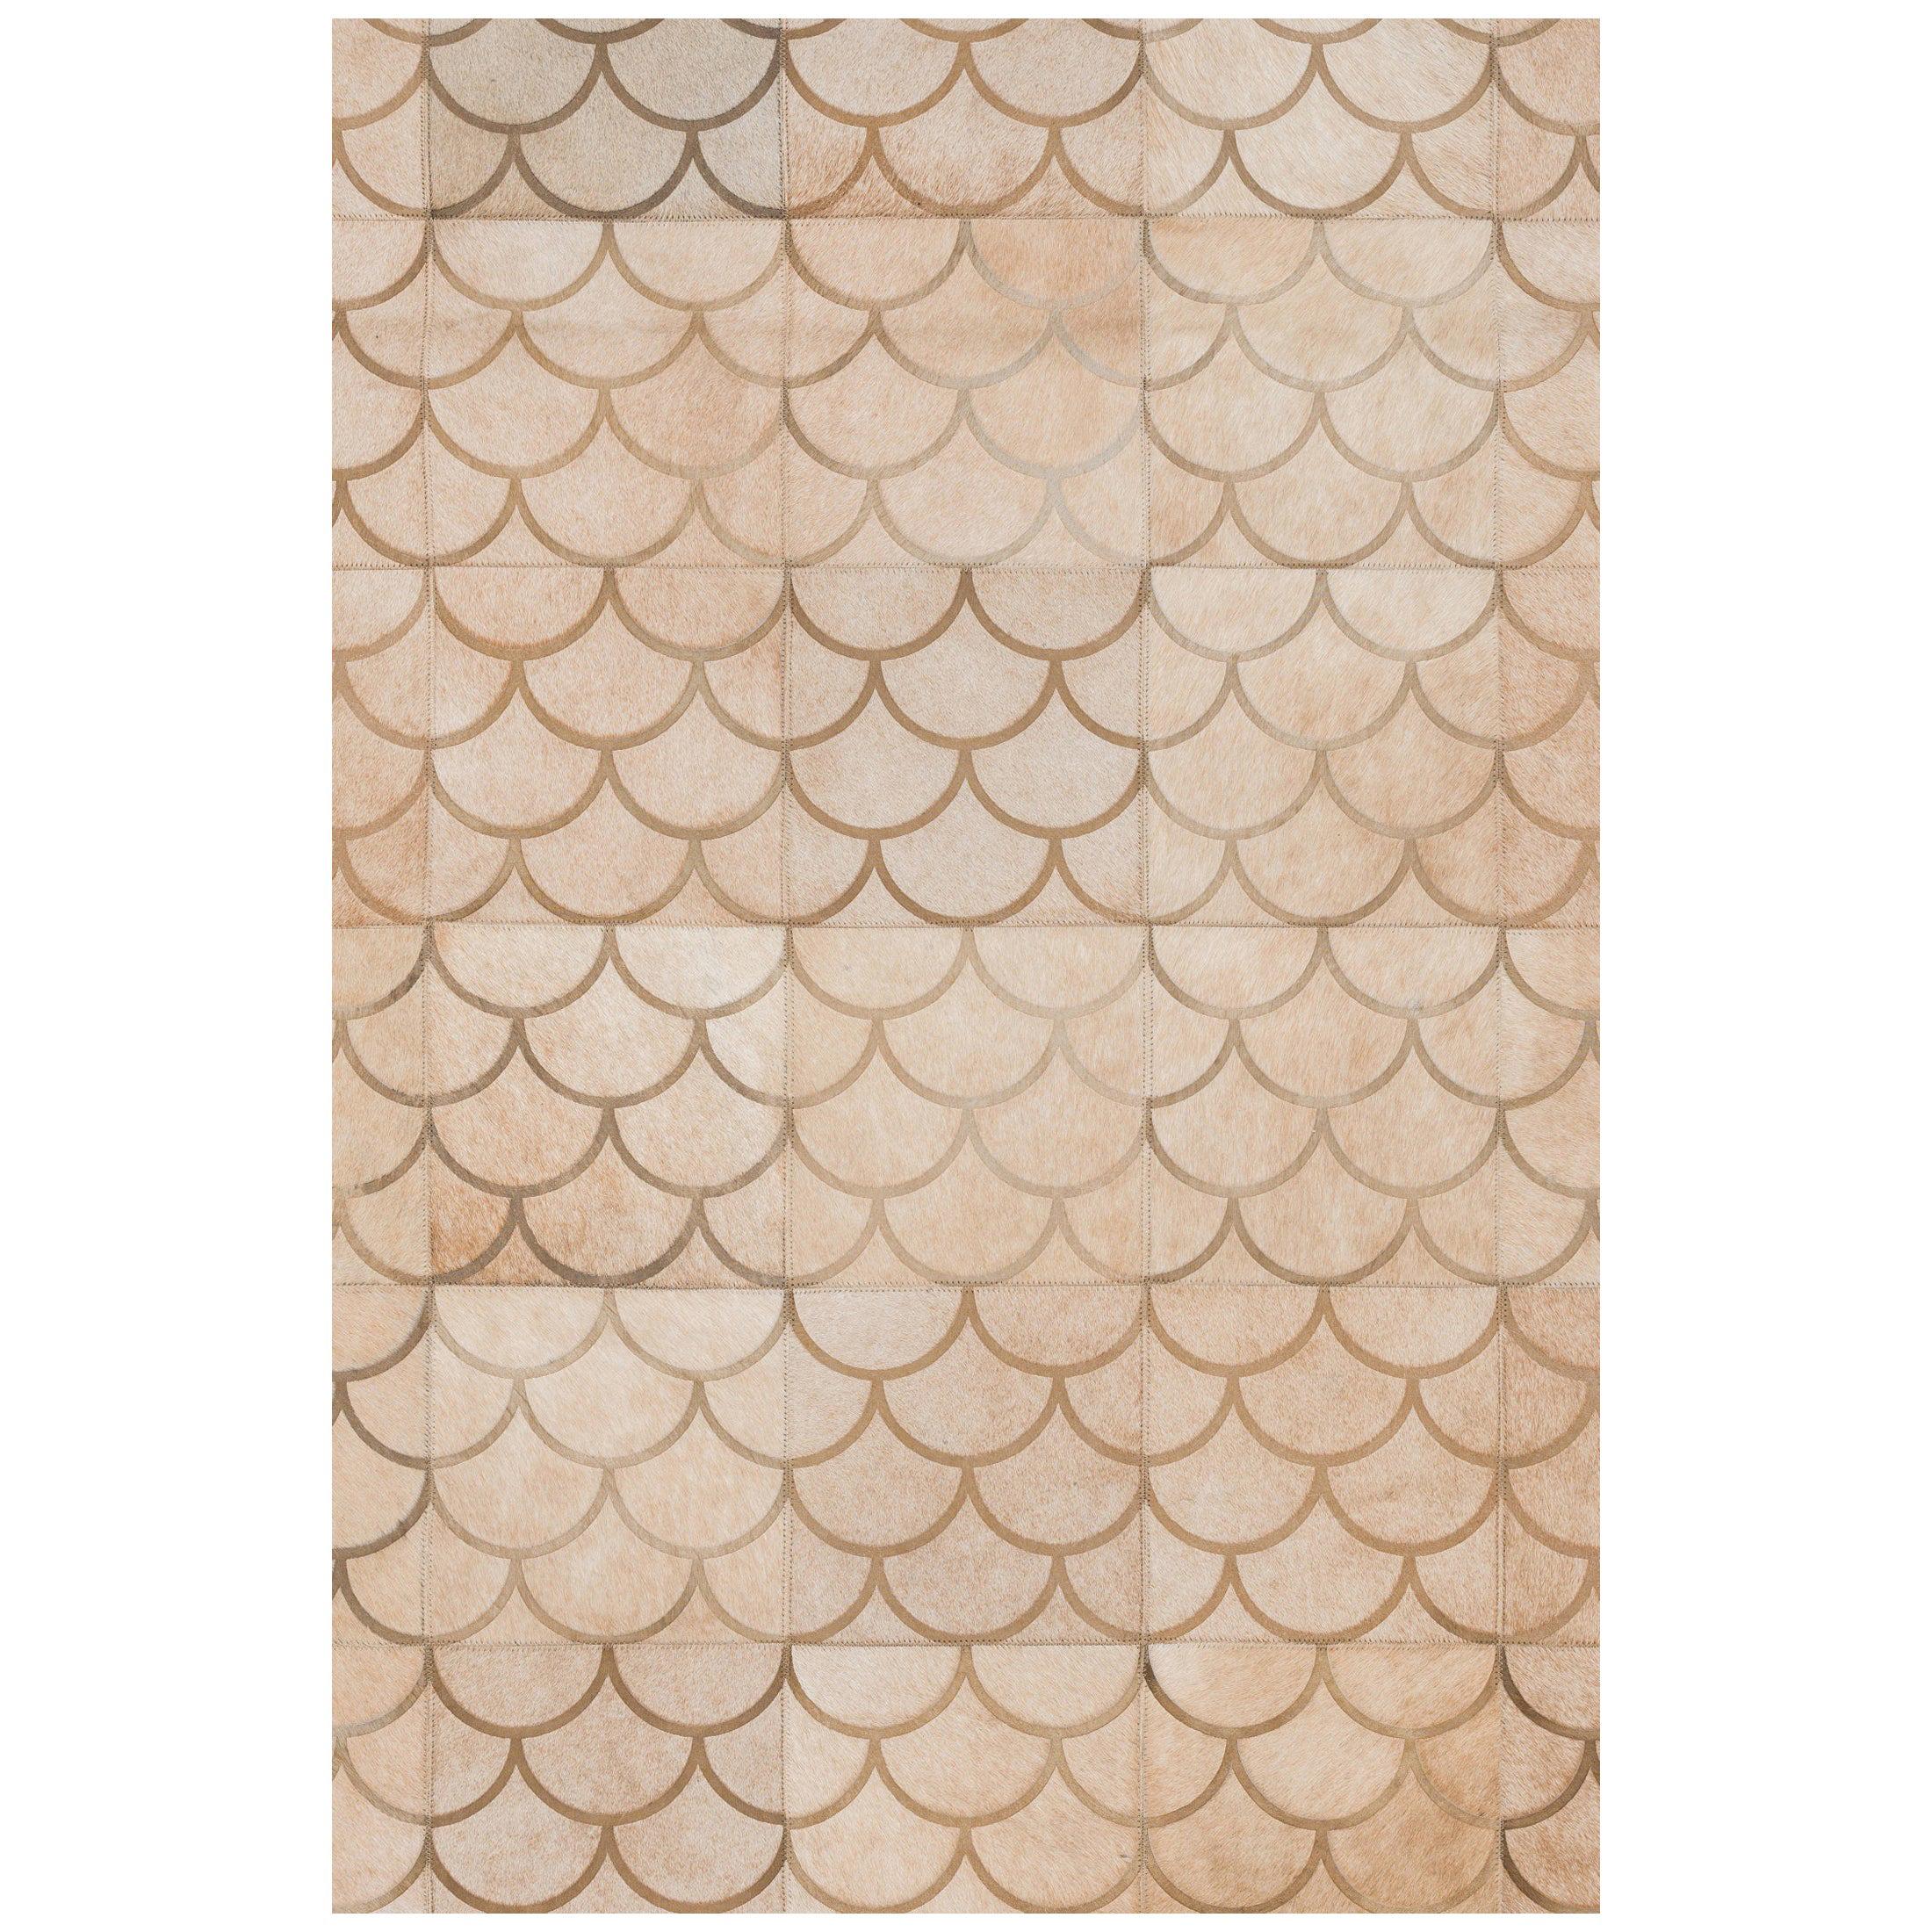 Modern Scallop crescent pattern Customizable Luneta Cowhide Area Floor Rug Large